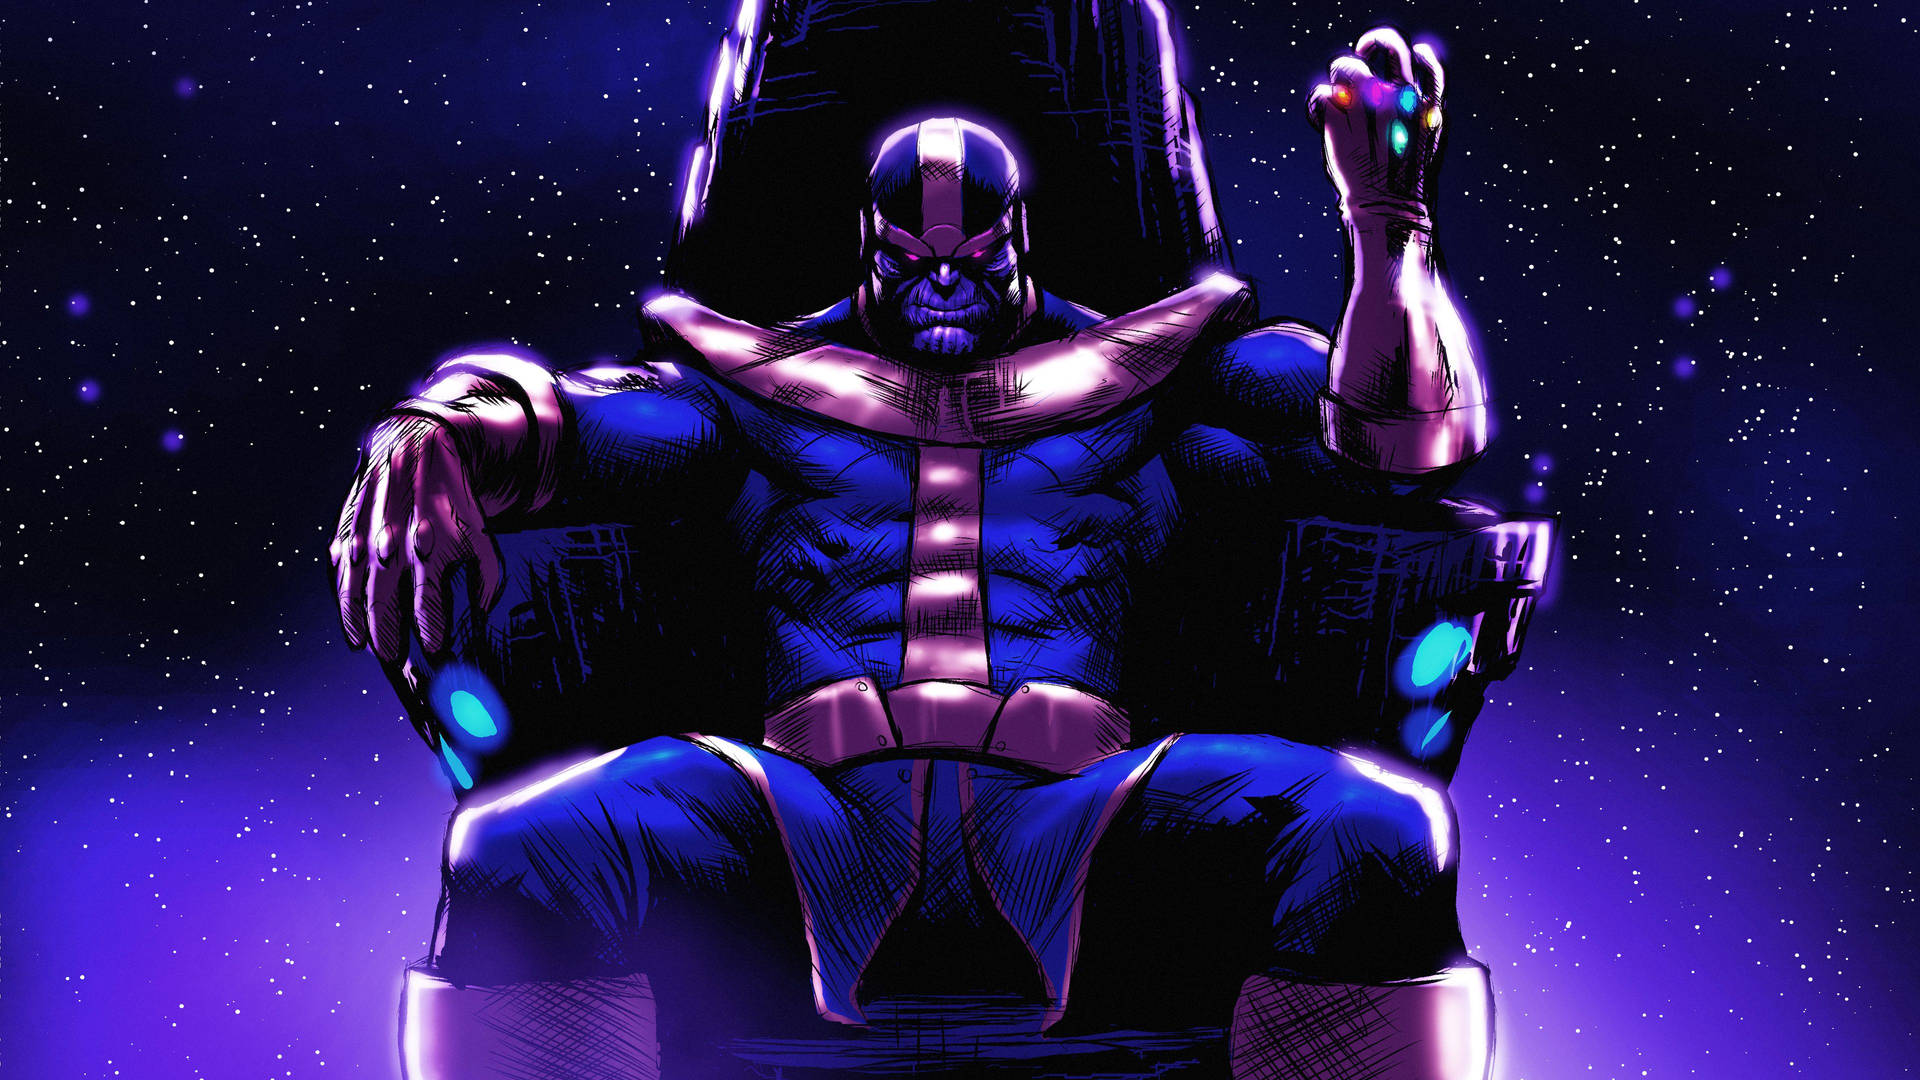 Iron Man vs Thanos Endgame iPhone Wallpaper - iPhone Wallpapers